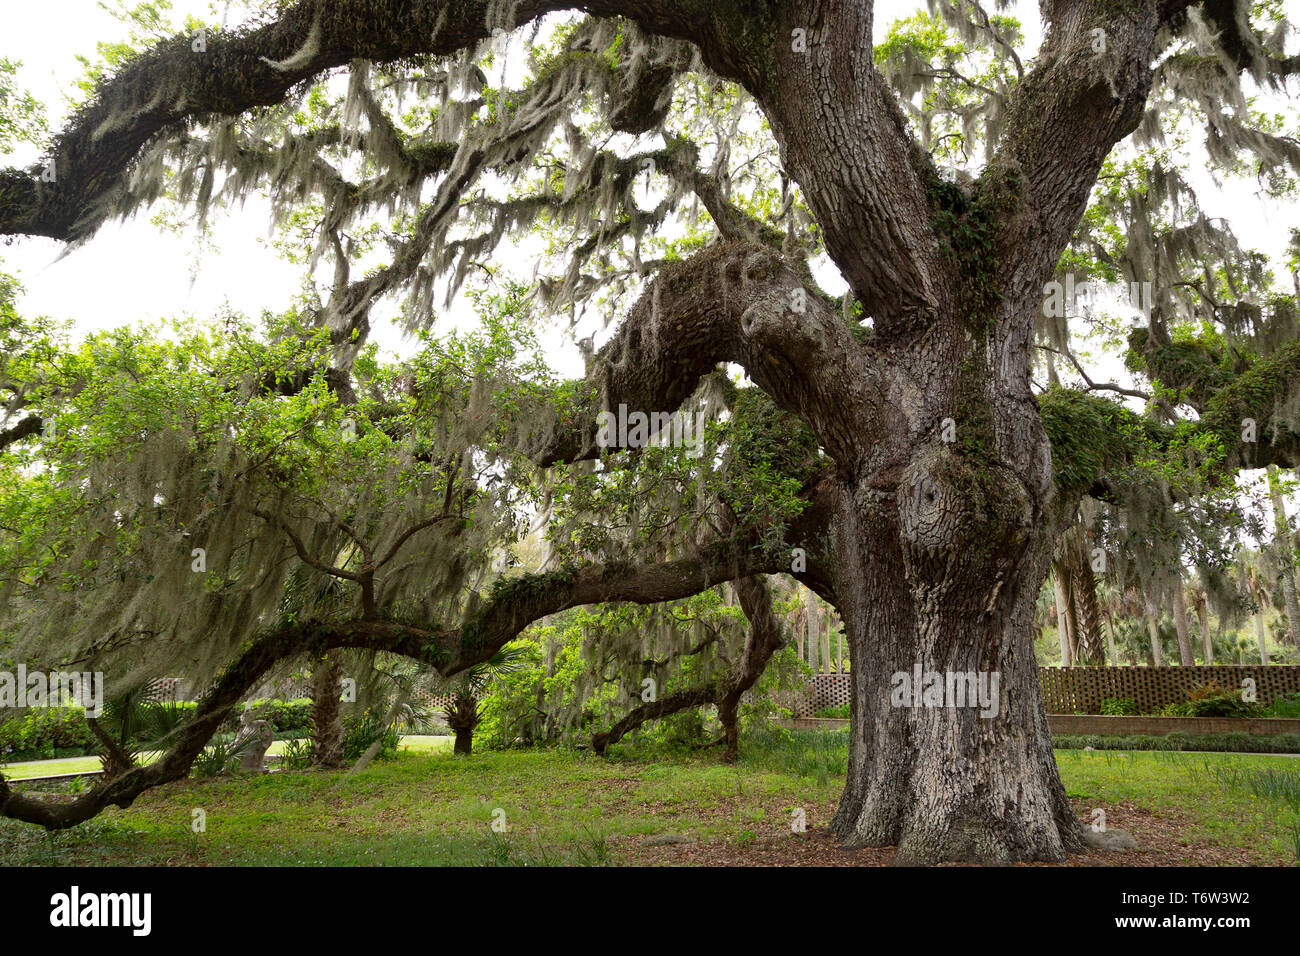 Live oak trees in South Carolina, USA. Spanish moss hangs from the trees. Stock Photo